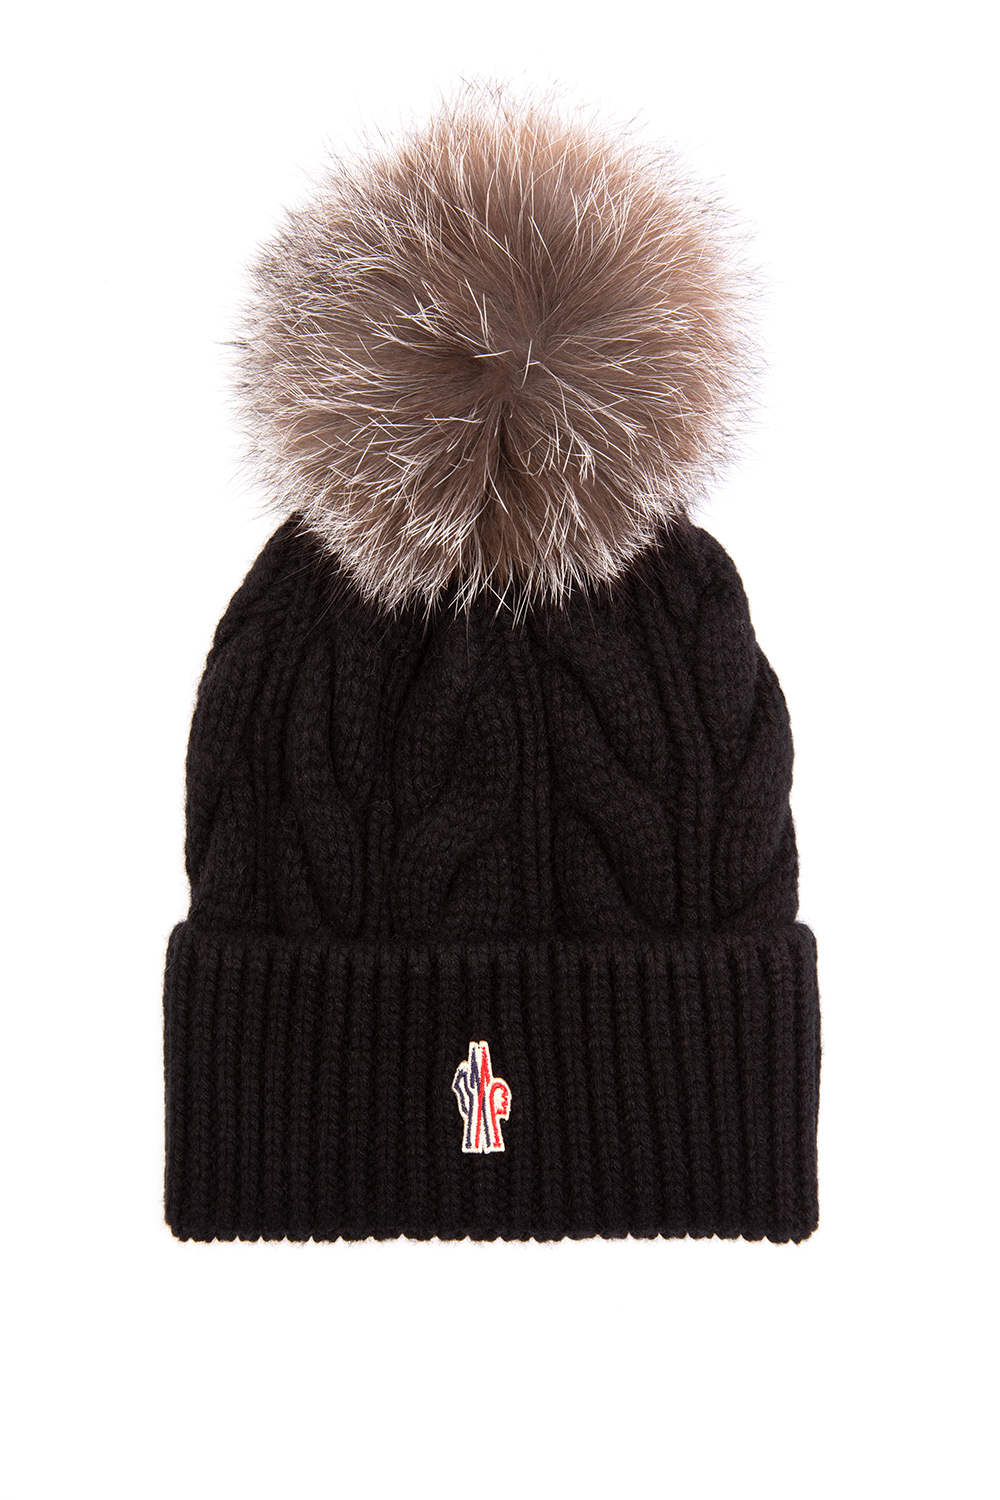 moncler knit hat with fur pom pom